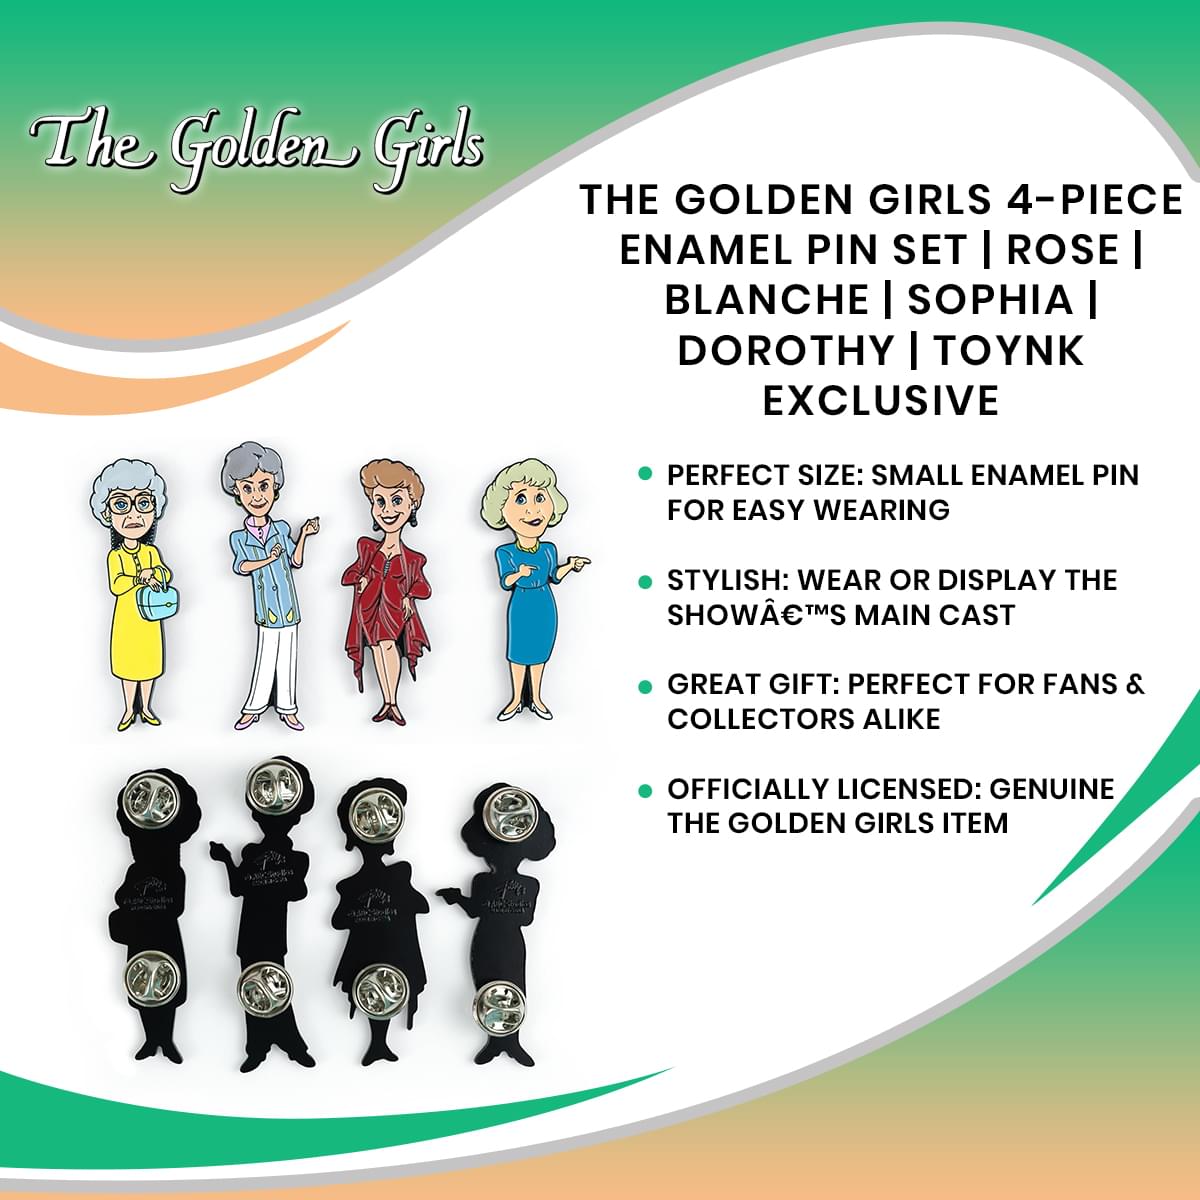 The Golden Girls 4-Piece Enamel Pin Set | Rose | Blanche | Sophia | Dorothy | Toynk Exclusive